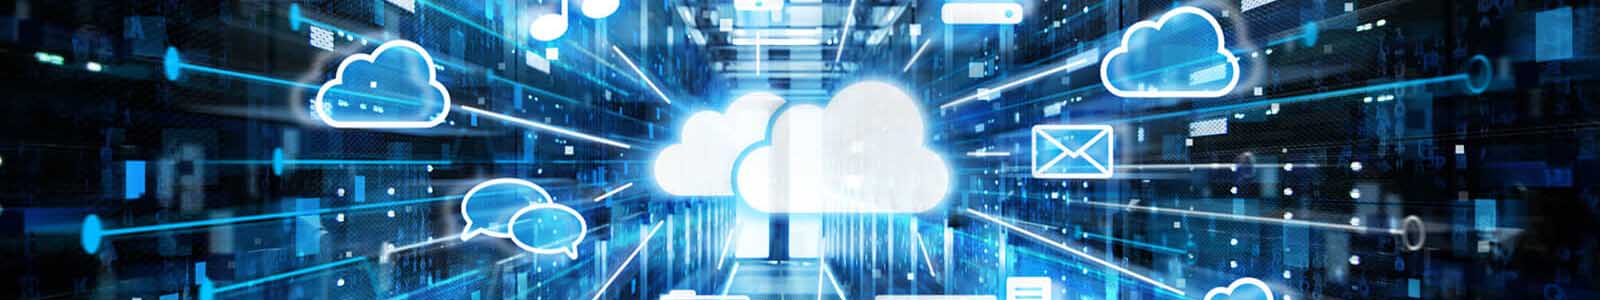 Digital Document Management and Enterprise Content Management cloud support for a remote workforce